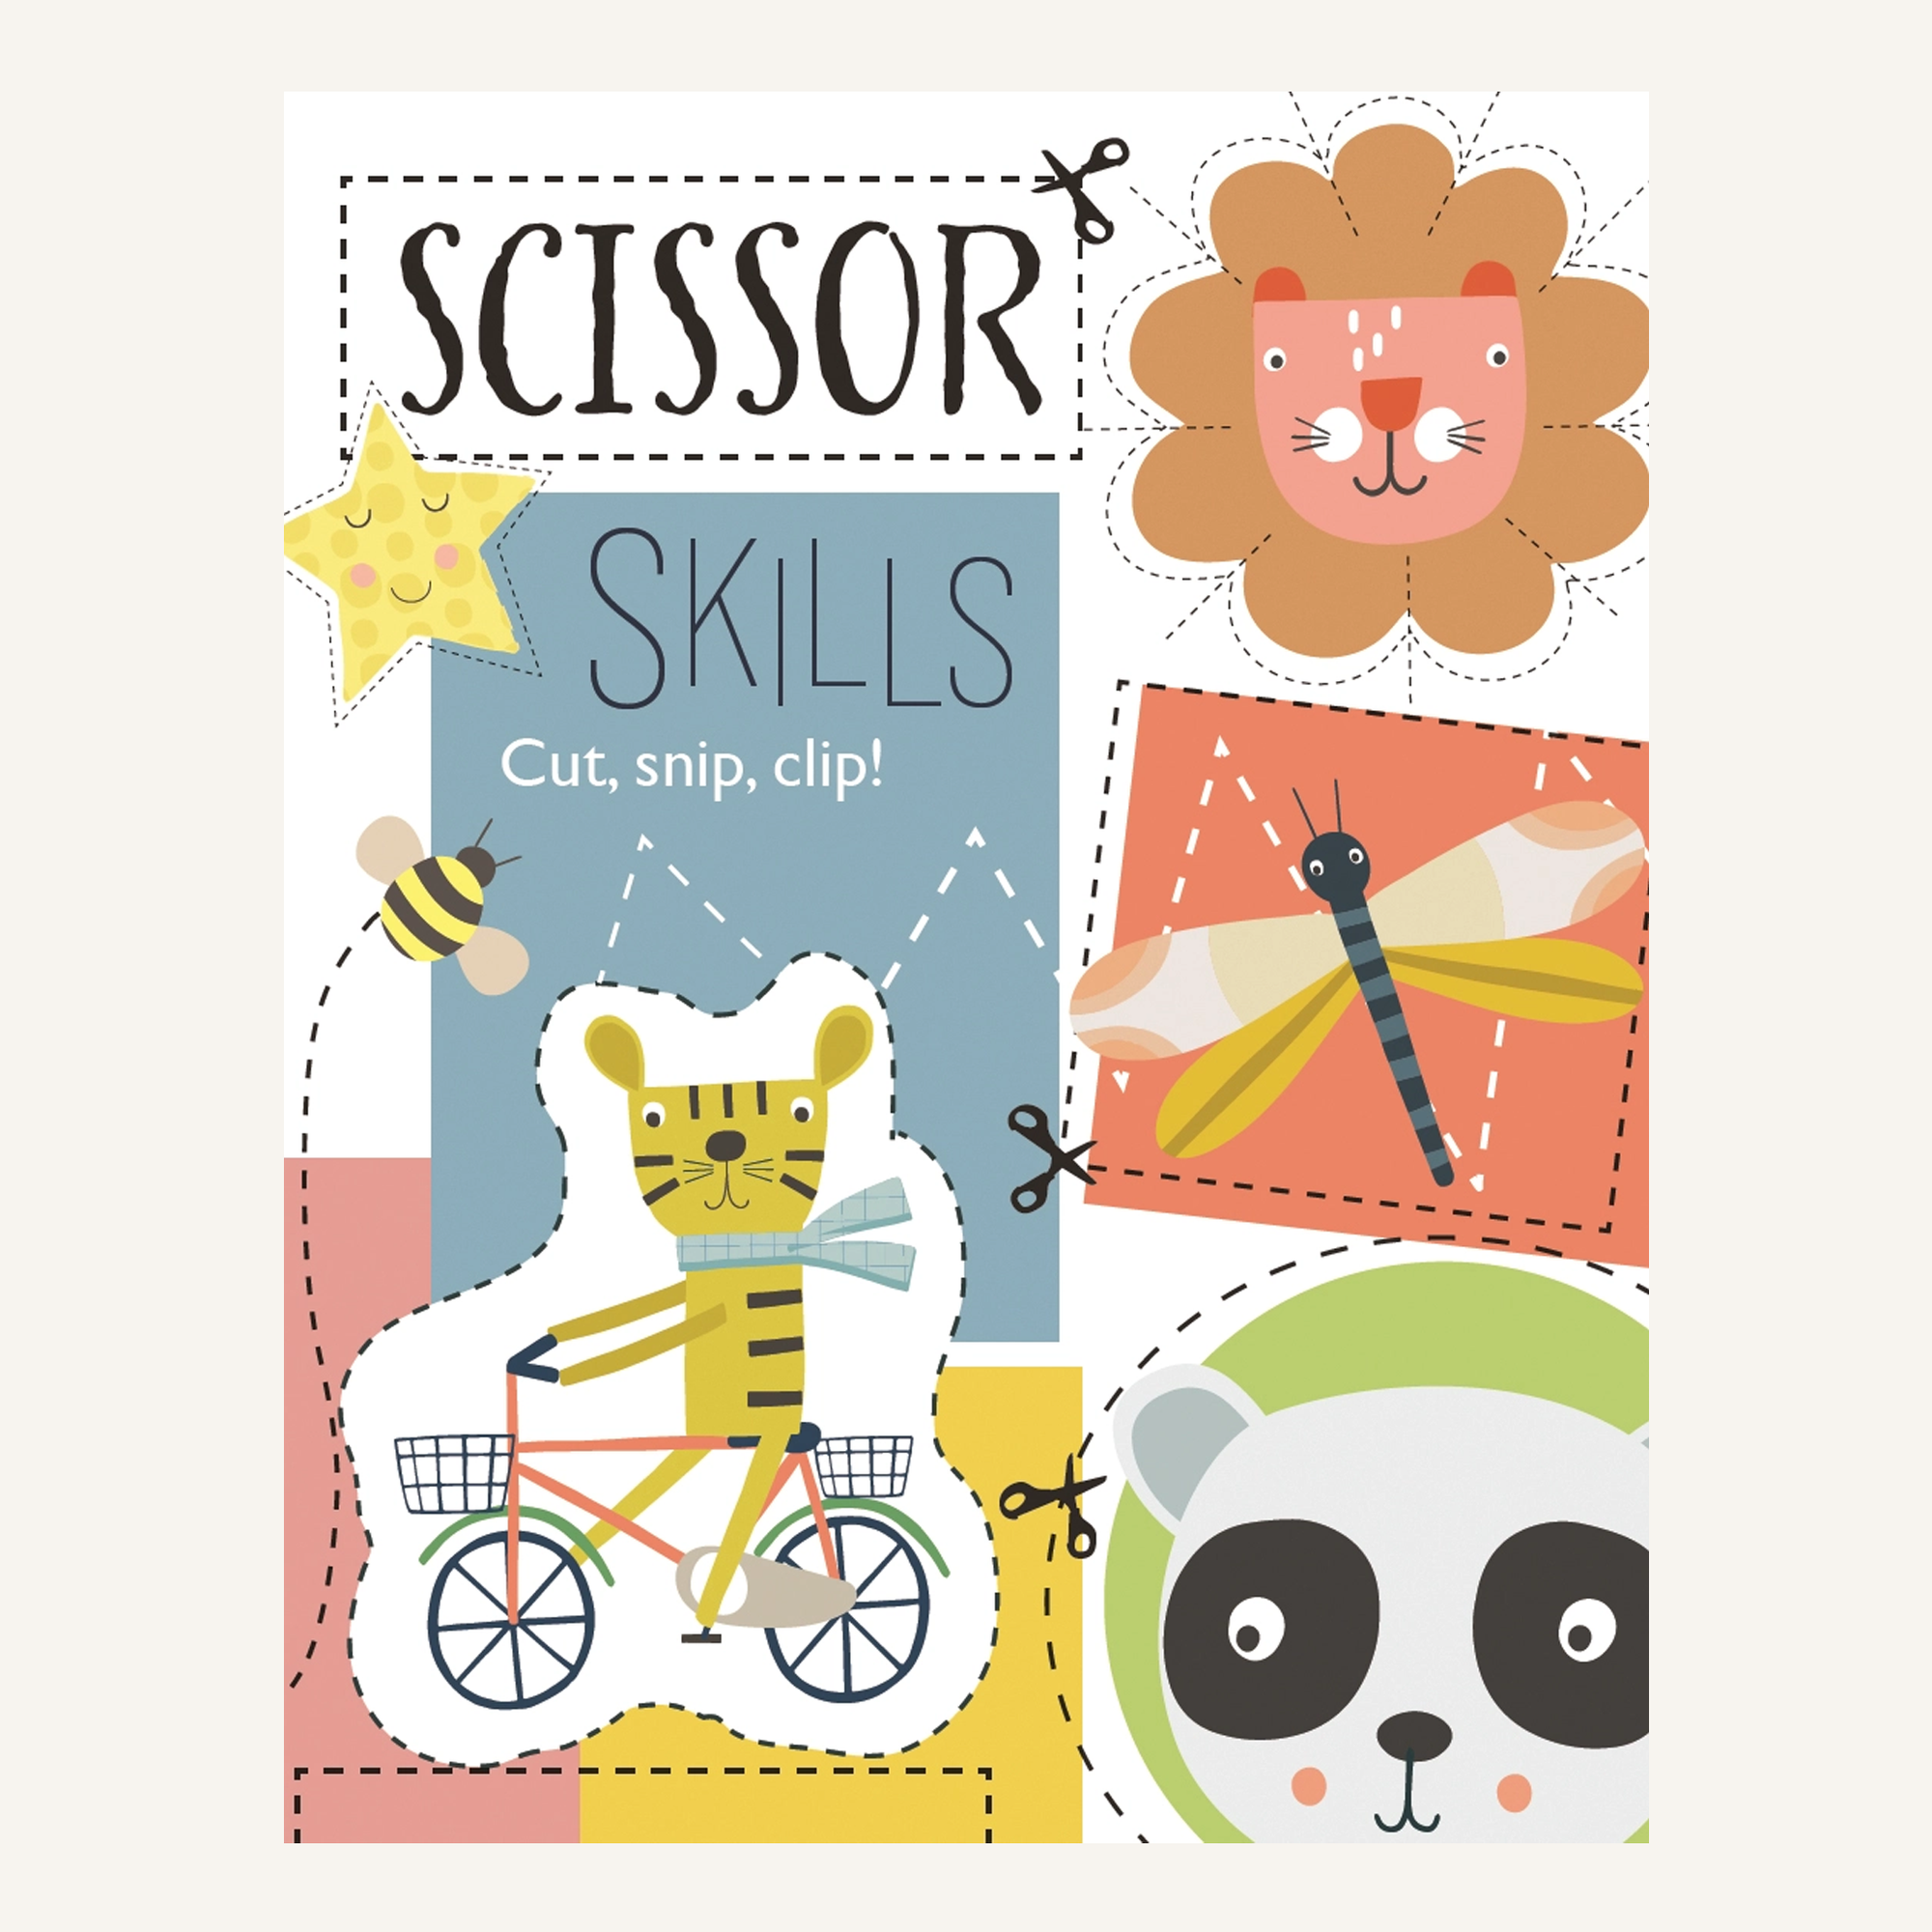 Scissor Skills: Cut, Snip, Clip!